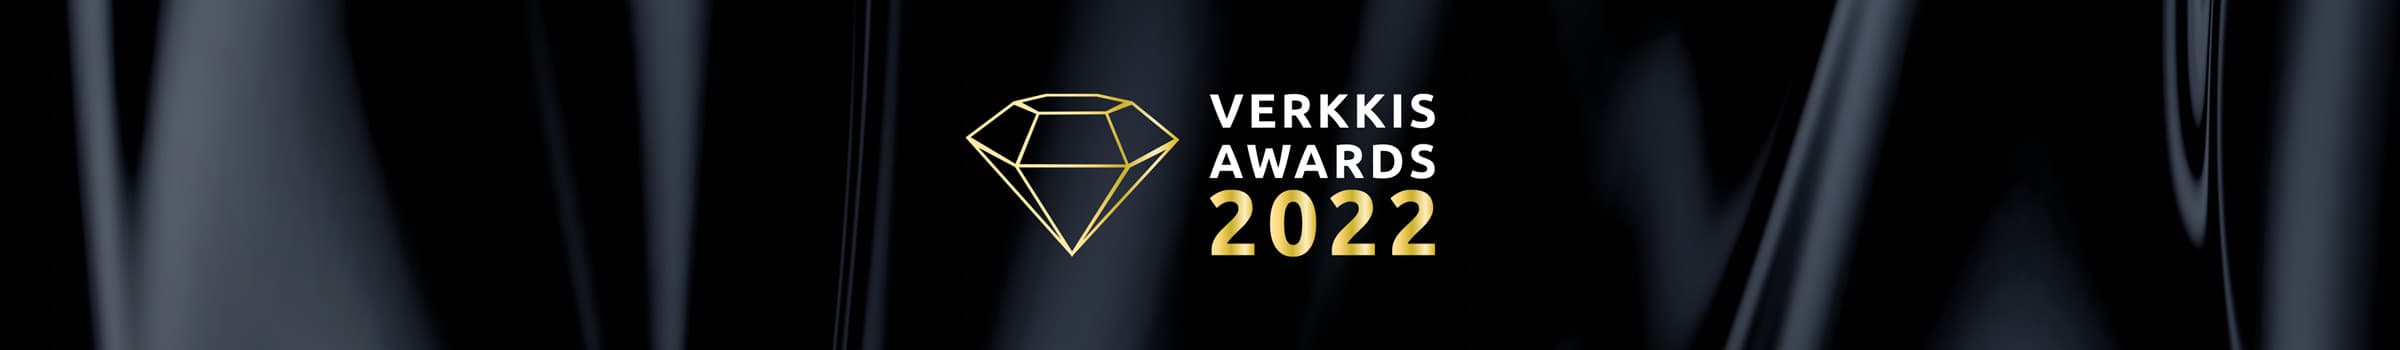 Verkkis Awards 2022